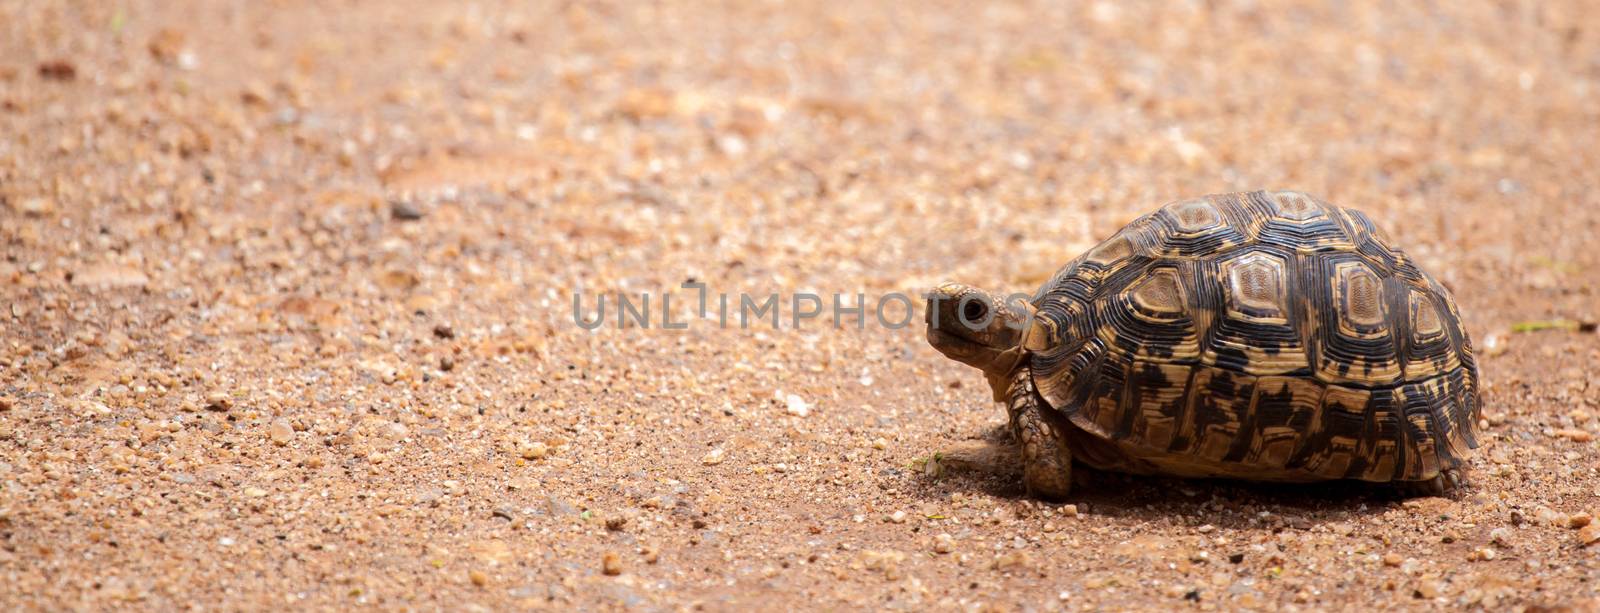 Turtle walking over the road, on safari in Kenya by 25ehaag6